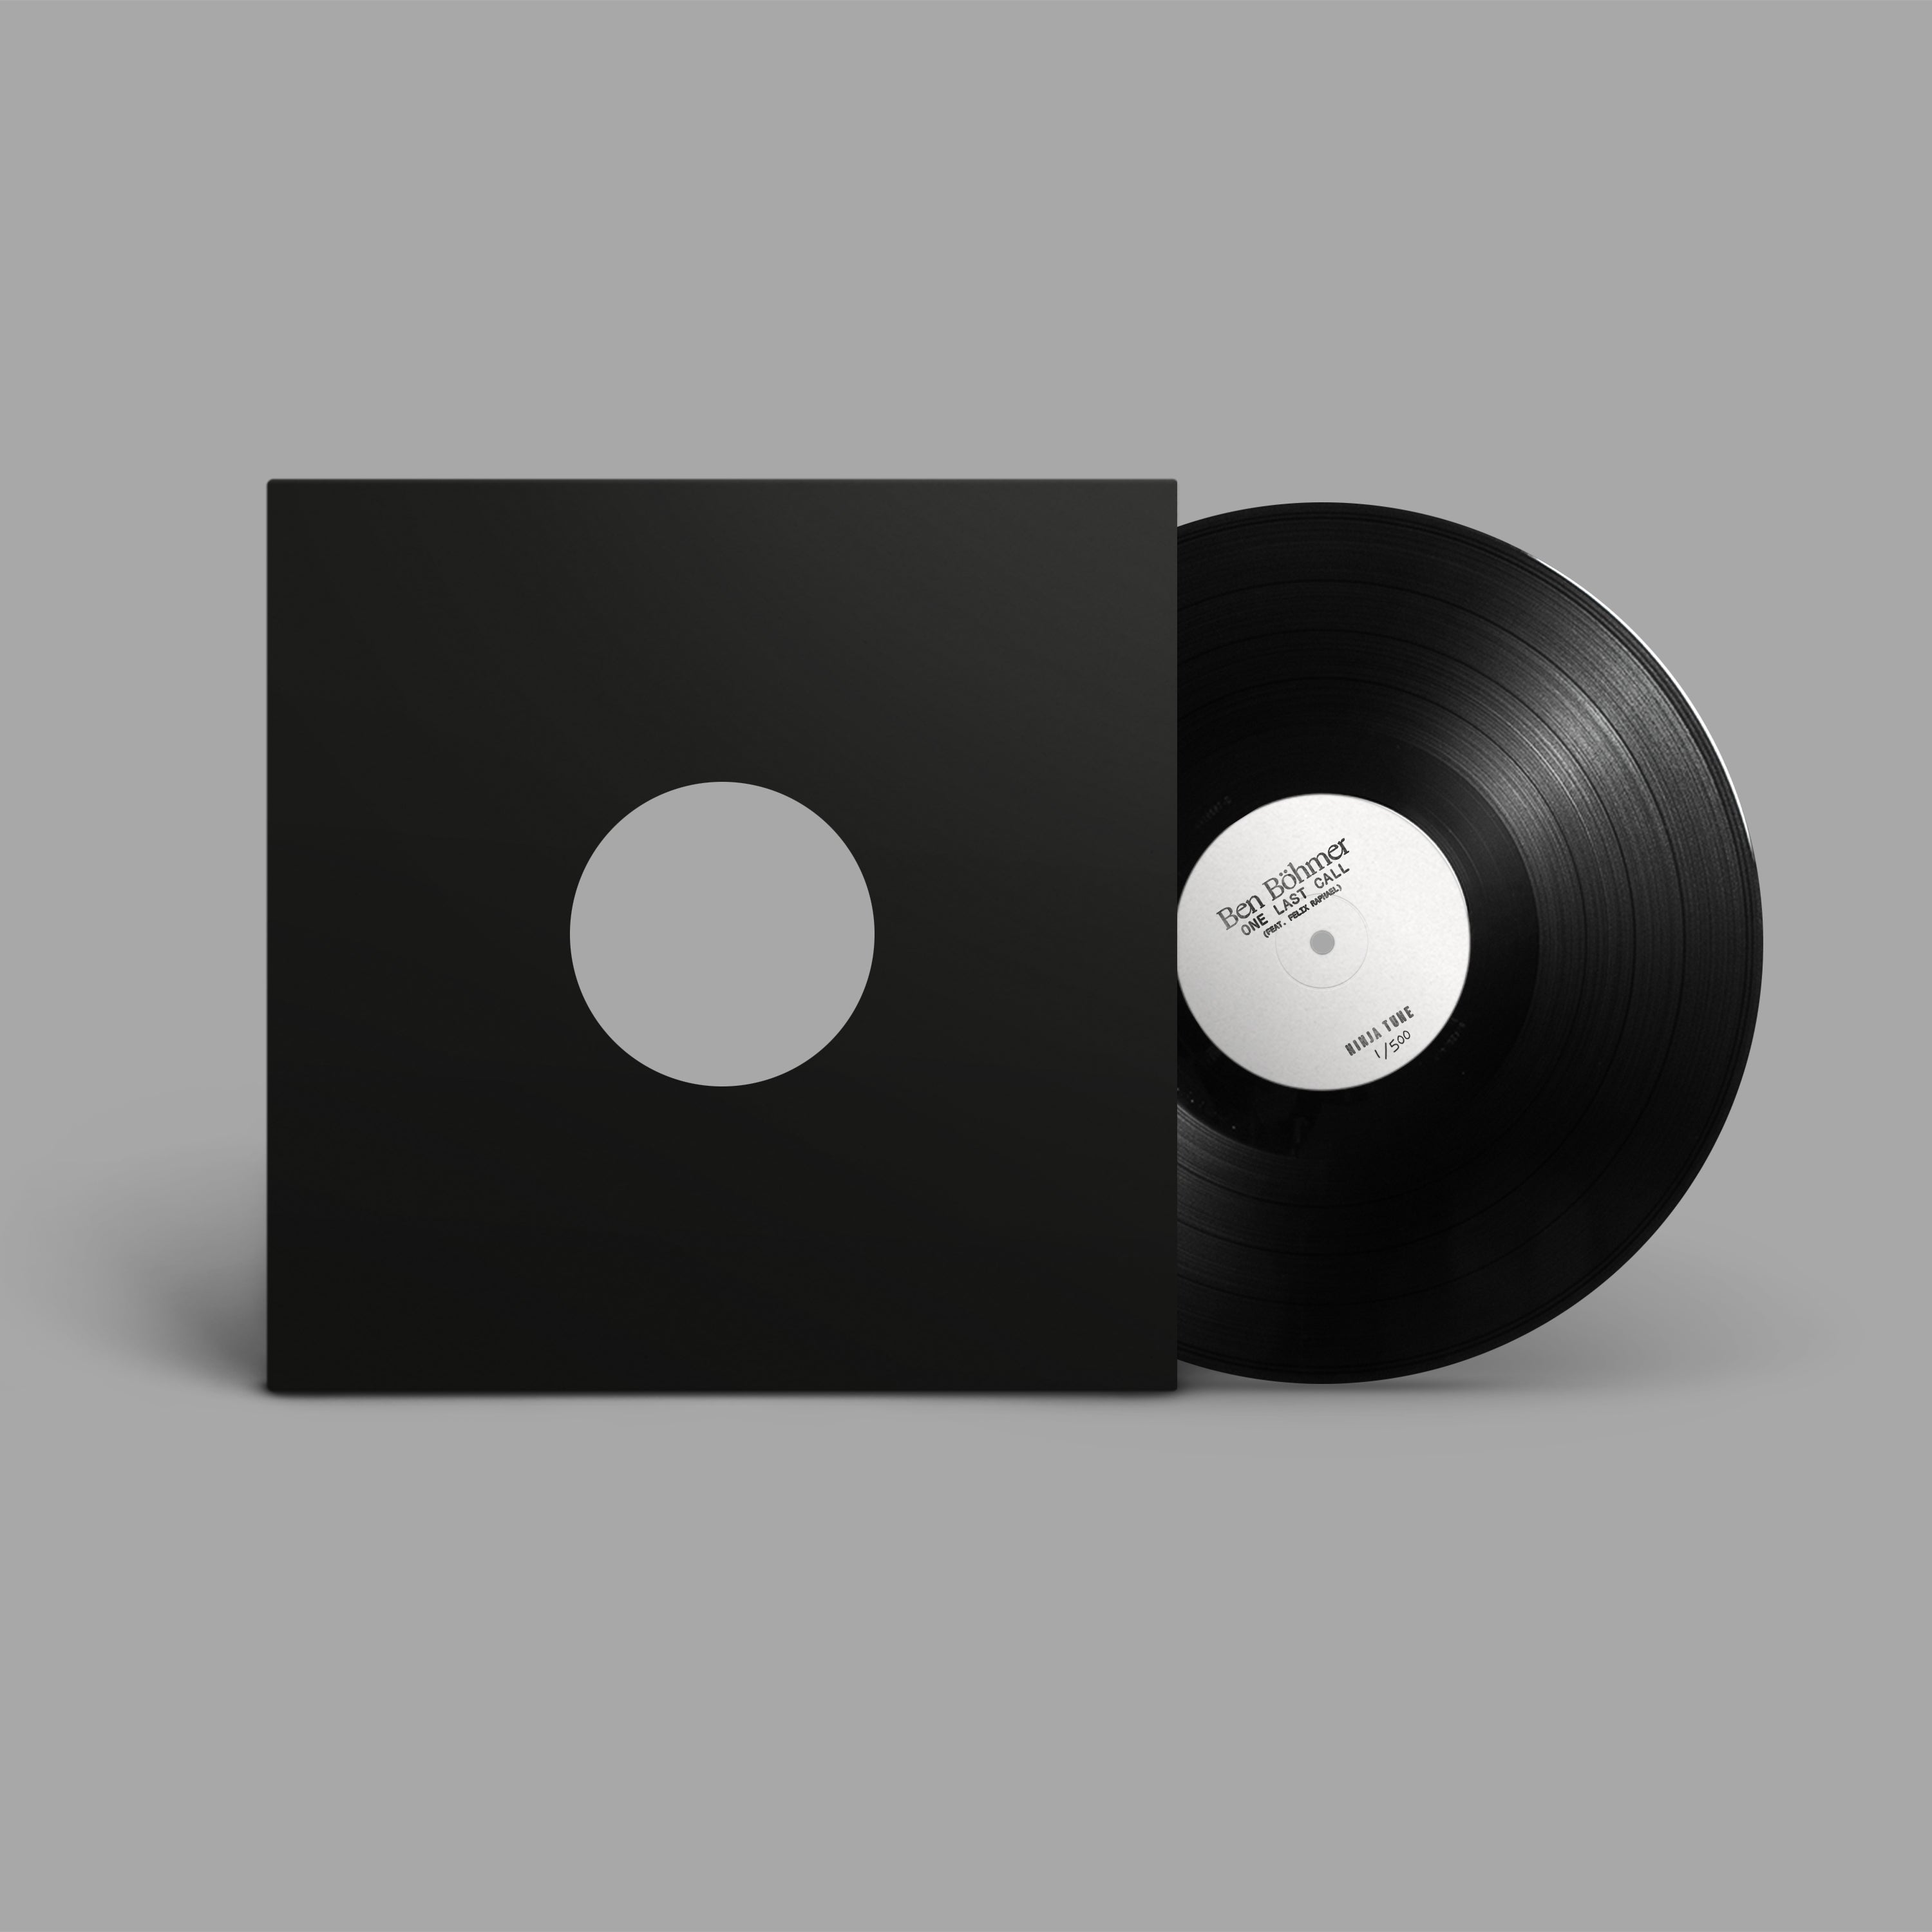 Ben Böhmer - One Last Call: White Label Vinyl 12" Single